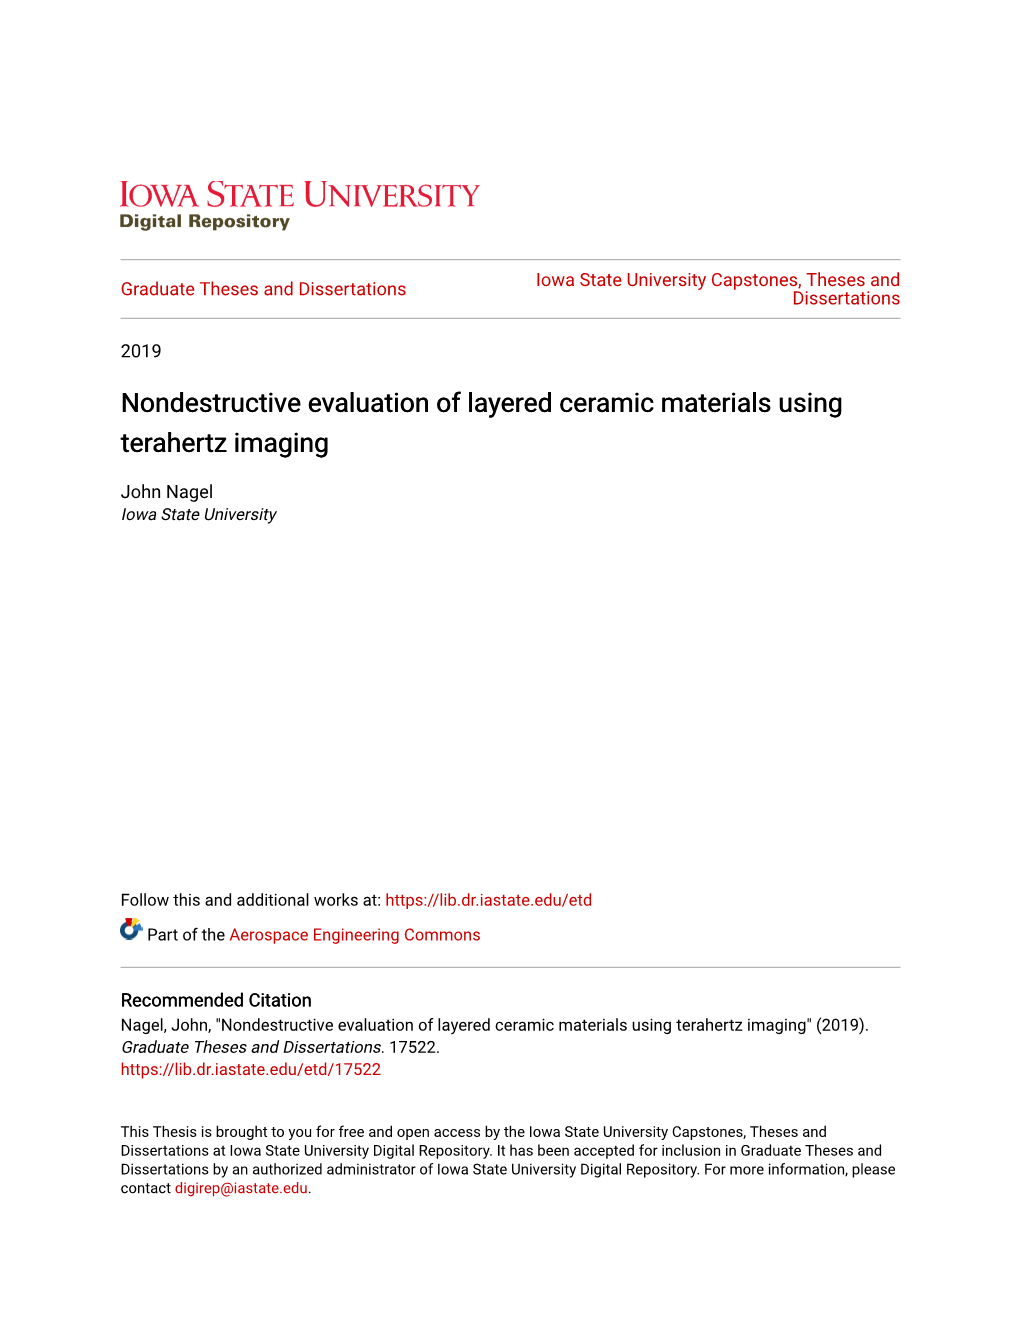 Nondestructive Evaluation of Layered Ceramic Materials Using Terahertz Imaging